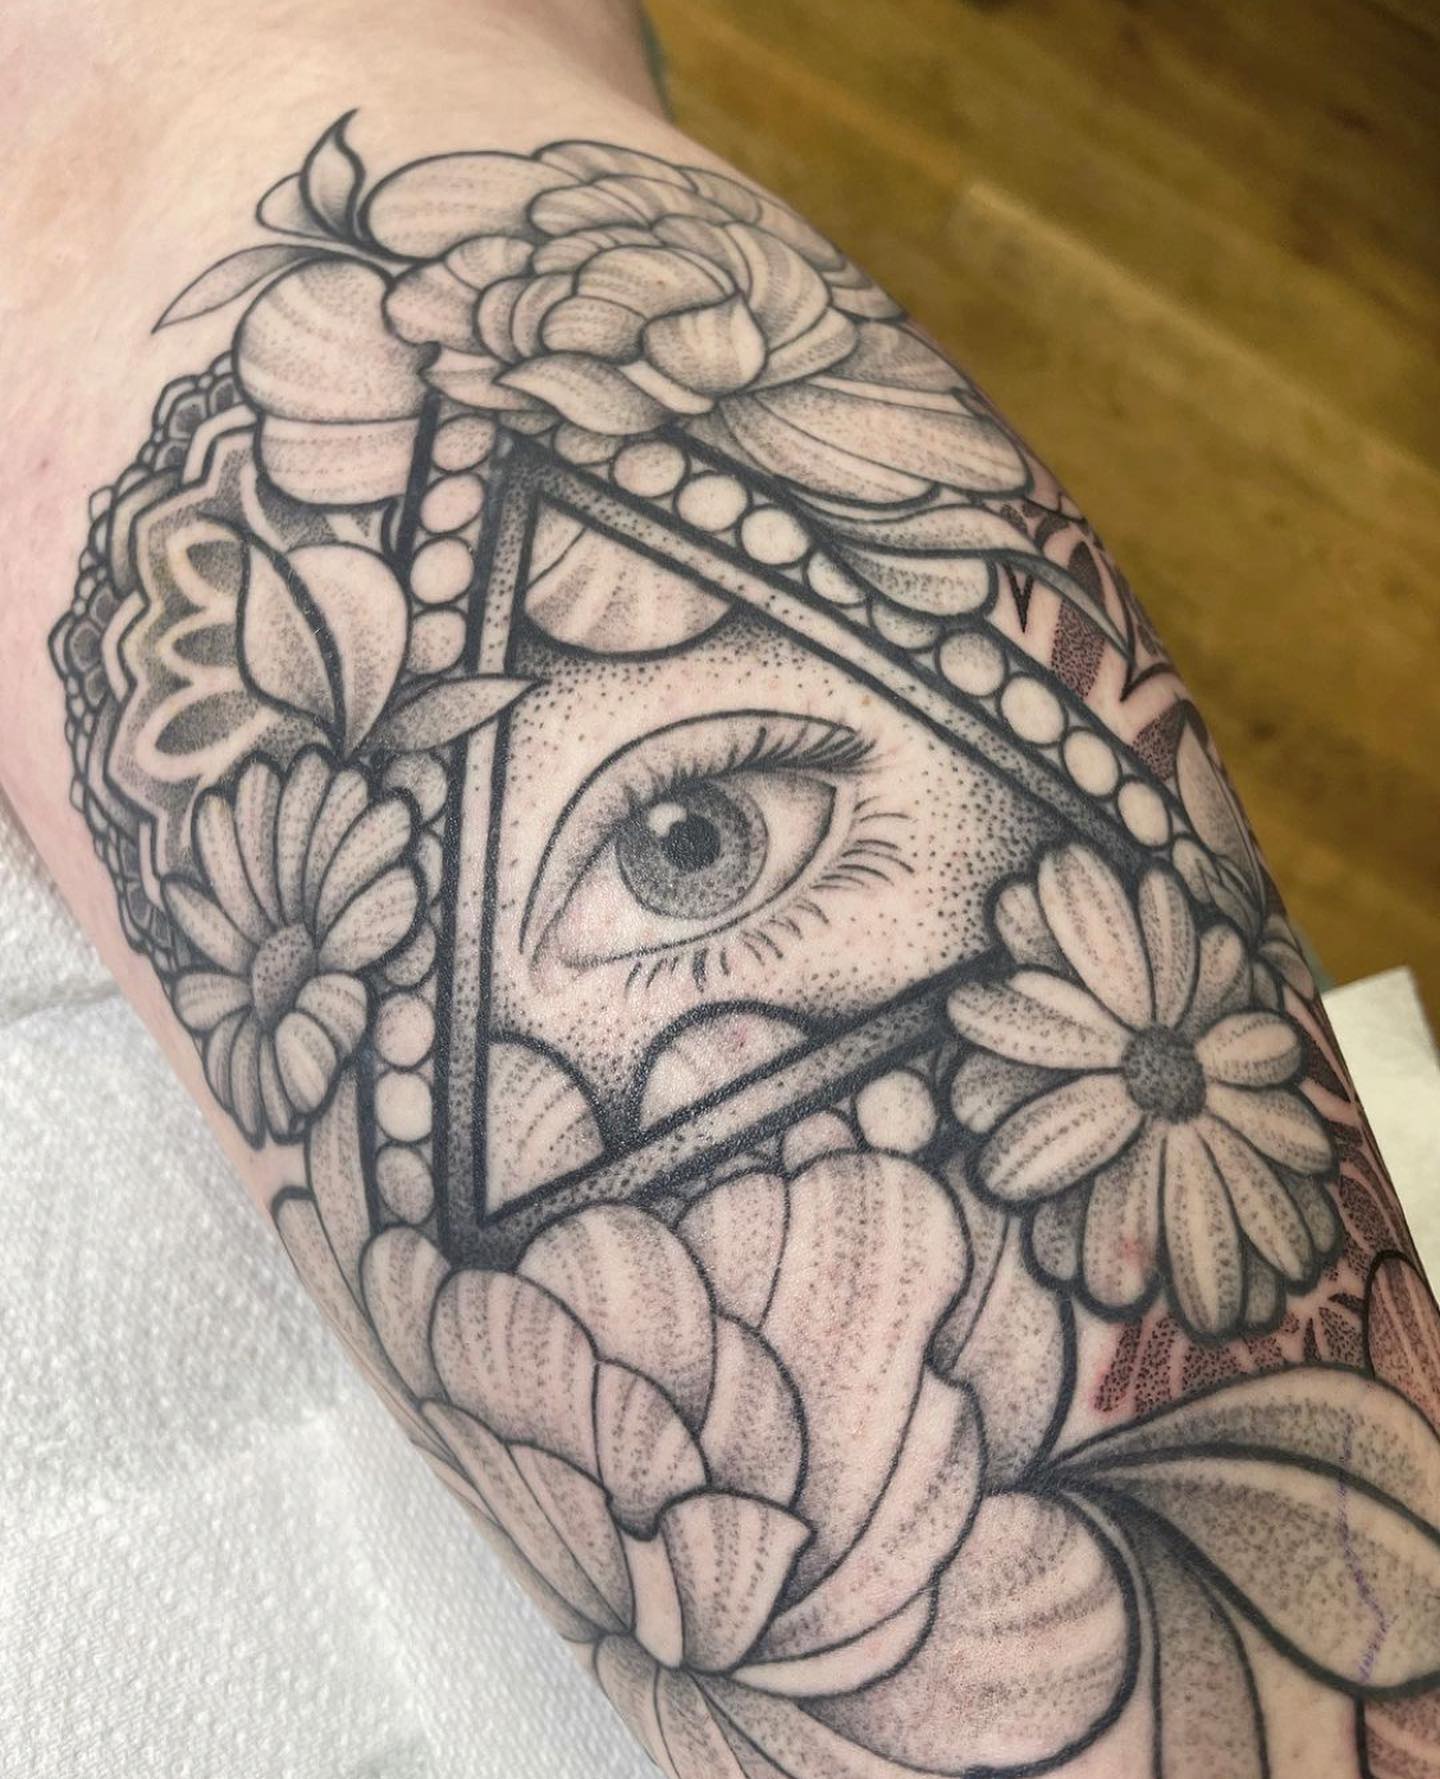 Tatuaje del ojo que todo lo ve de los Illuminati